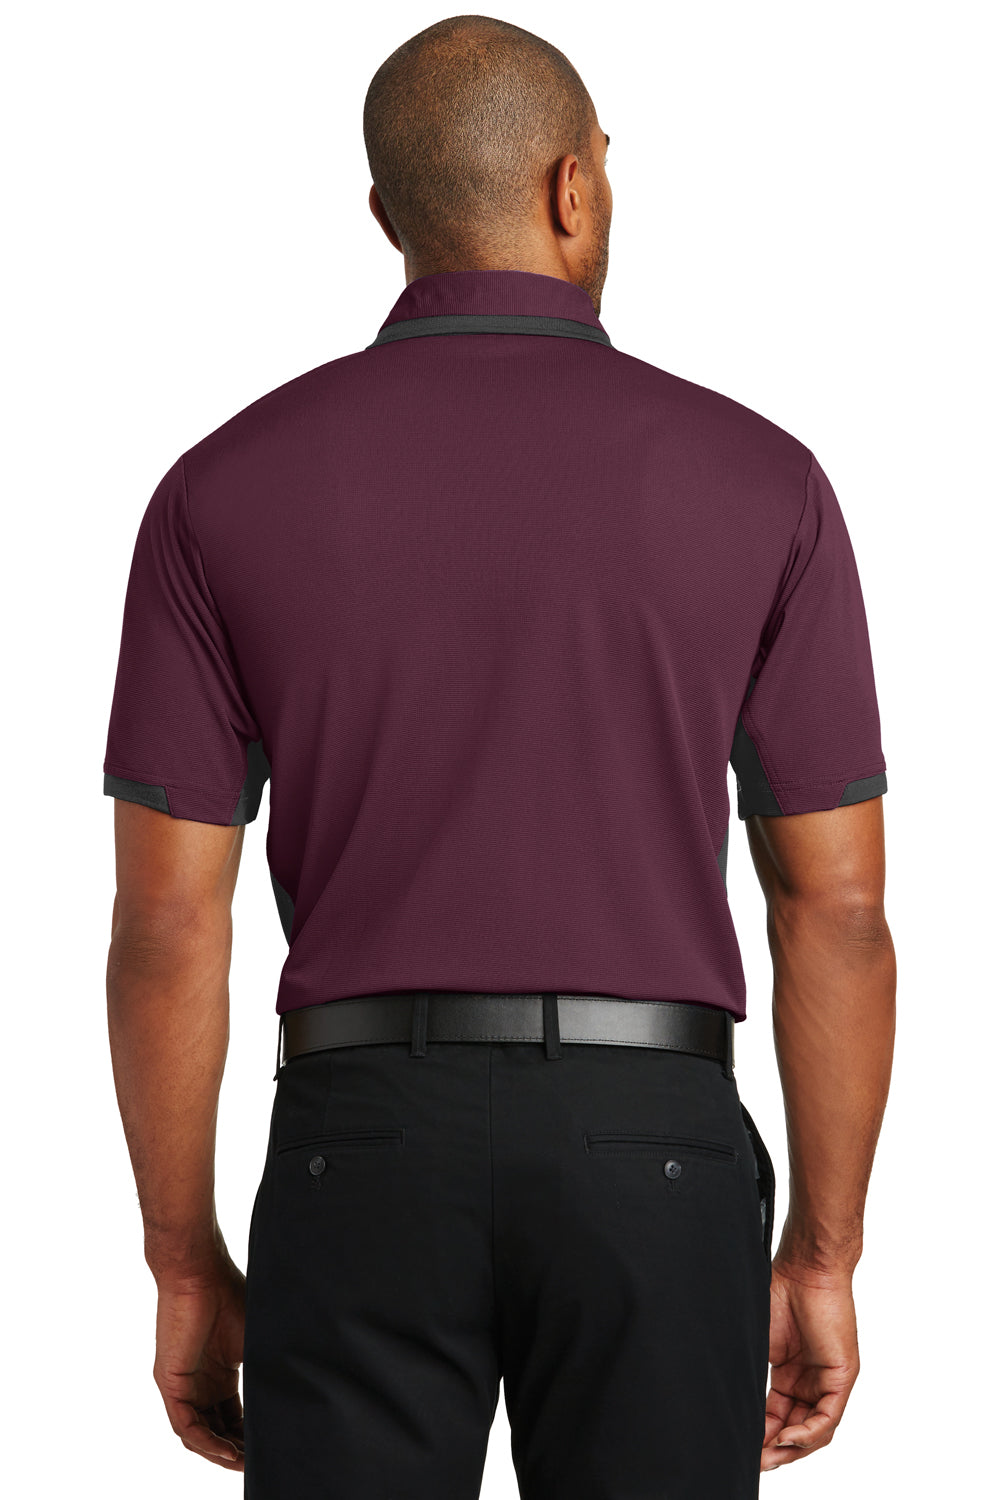 Port Authority K524 Mens Dry Zone Moisture Wicking Short Sleeve Polo Shirt Maroon/Black Back